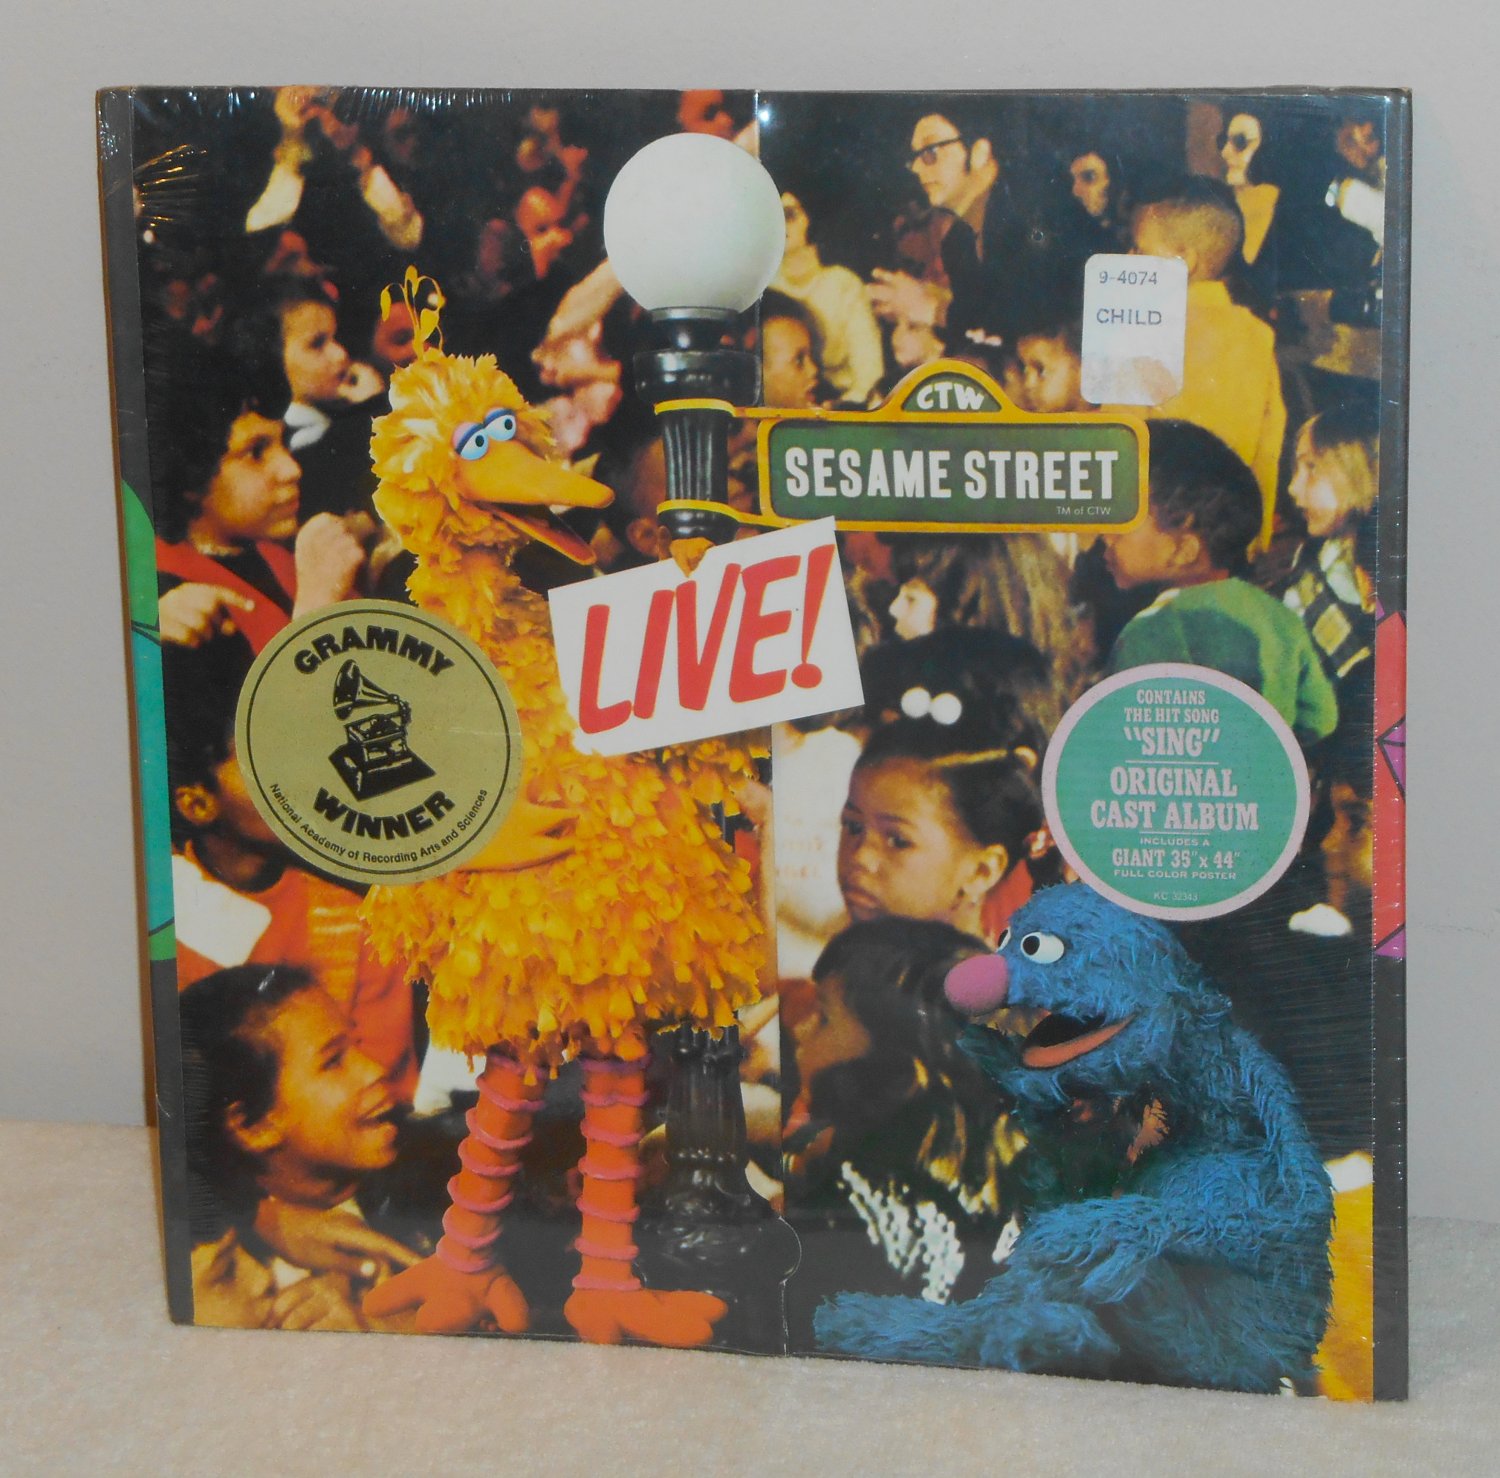 CTW Sesame Street Live LP Record Album Vinyl 33 RPM Giant Poster Factory Sealed Grammy Winner 1973